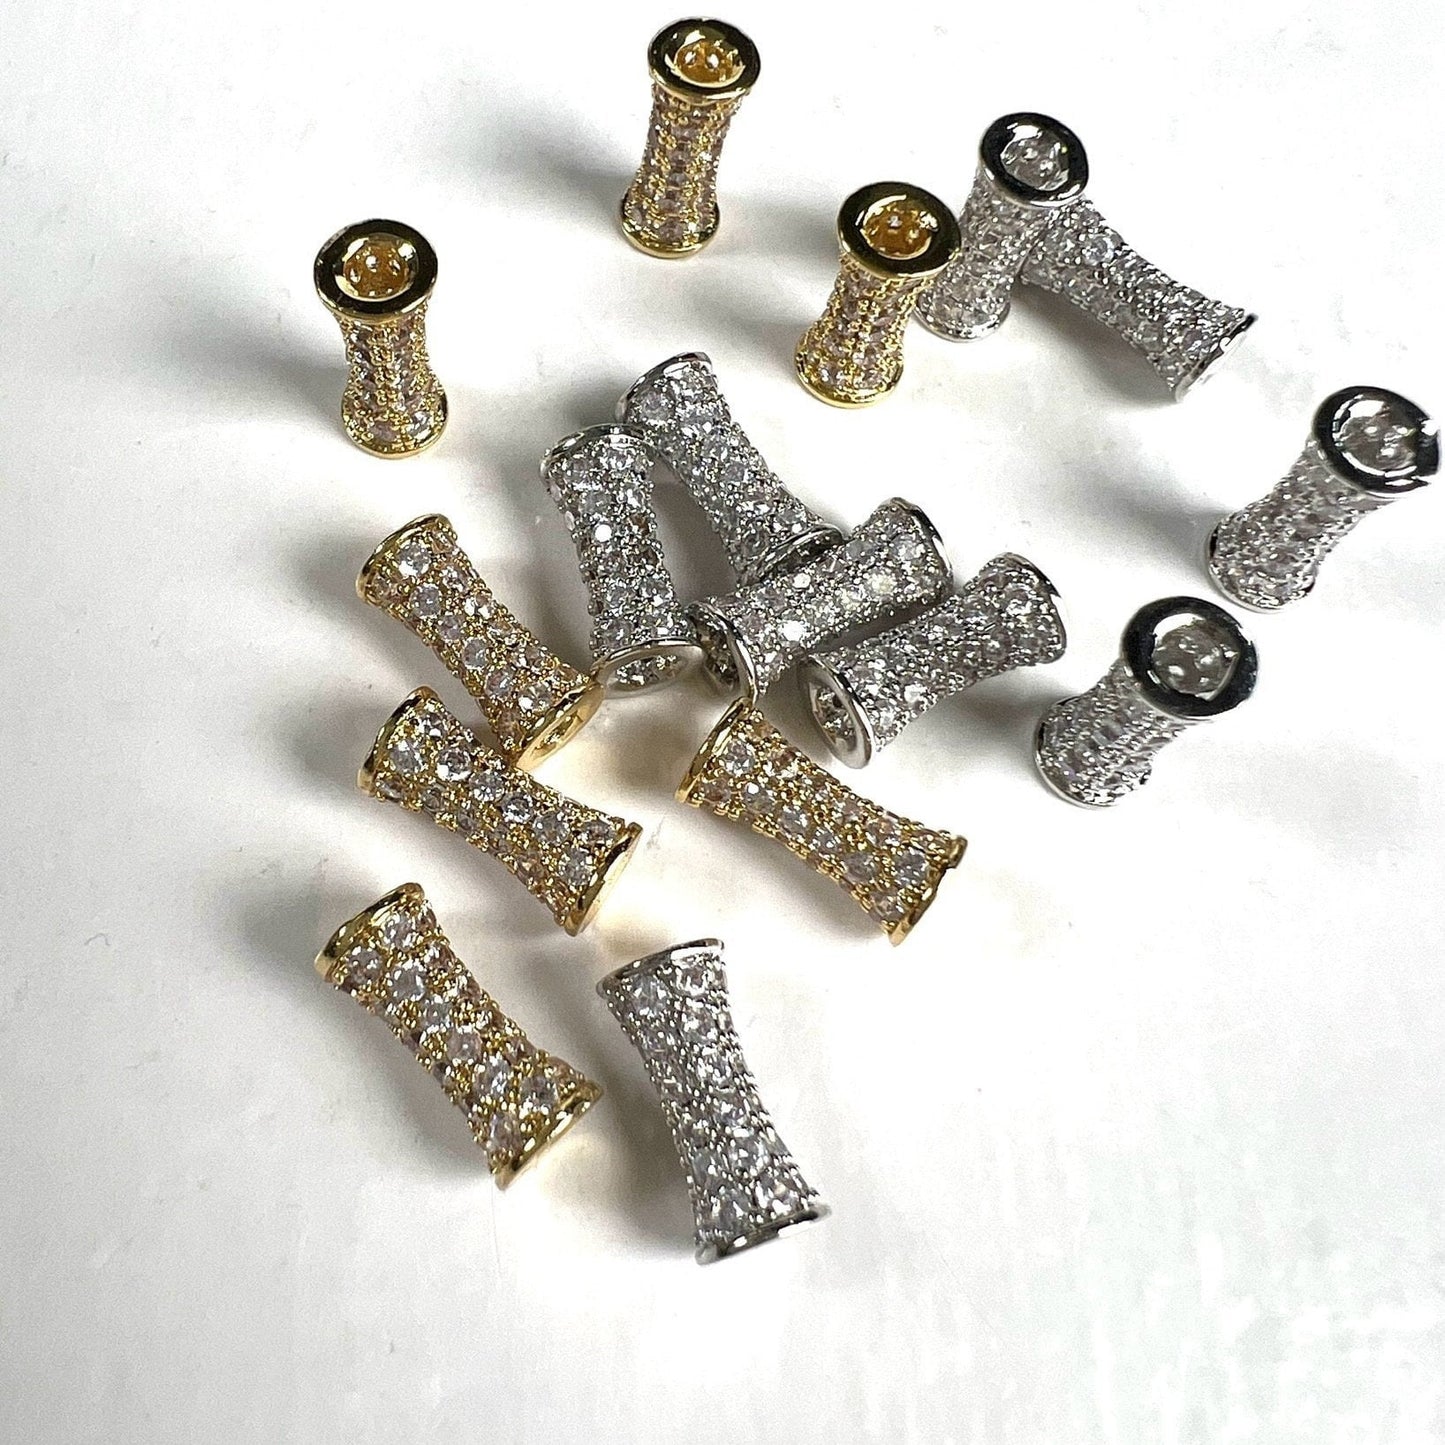 Cubic Zirconia CZ diamond Micro Pave dog bone shape tube spacer pendant center piece 4.5x9.5mm long. 1 piece